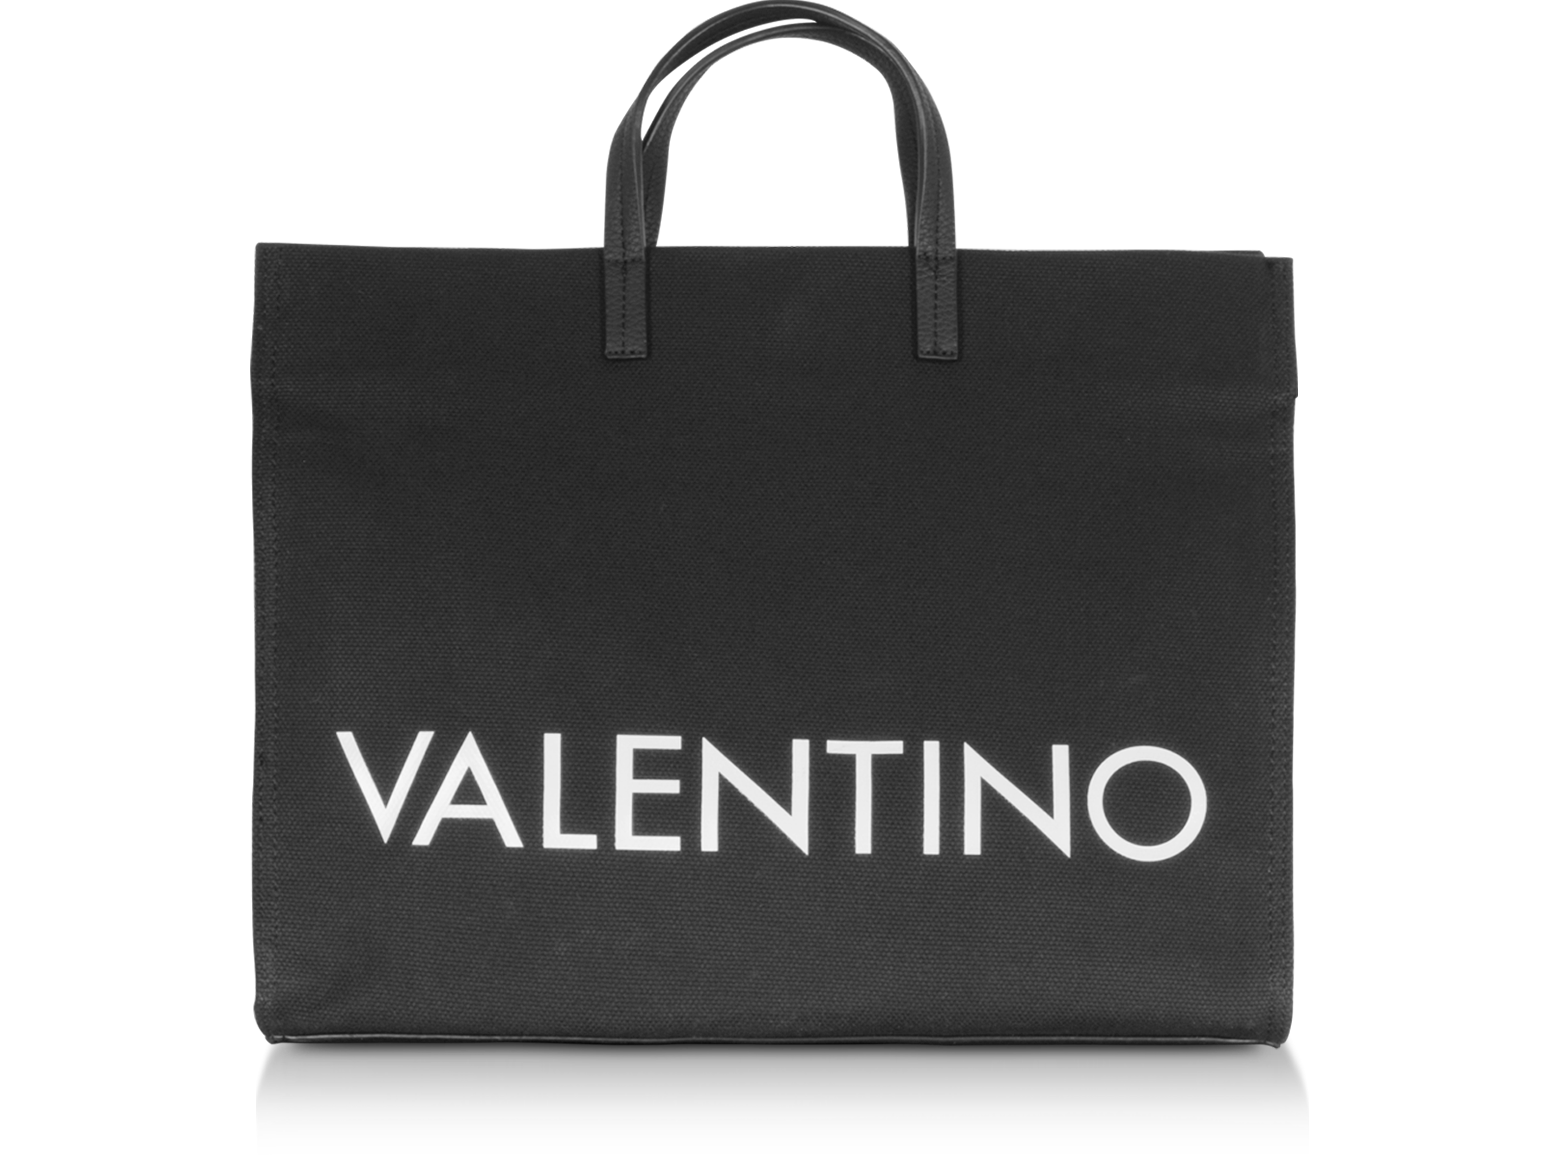 Mario Valentino Black Large Bag VBS5ZK04 AVERN 001 Black